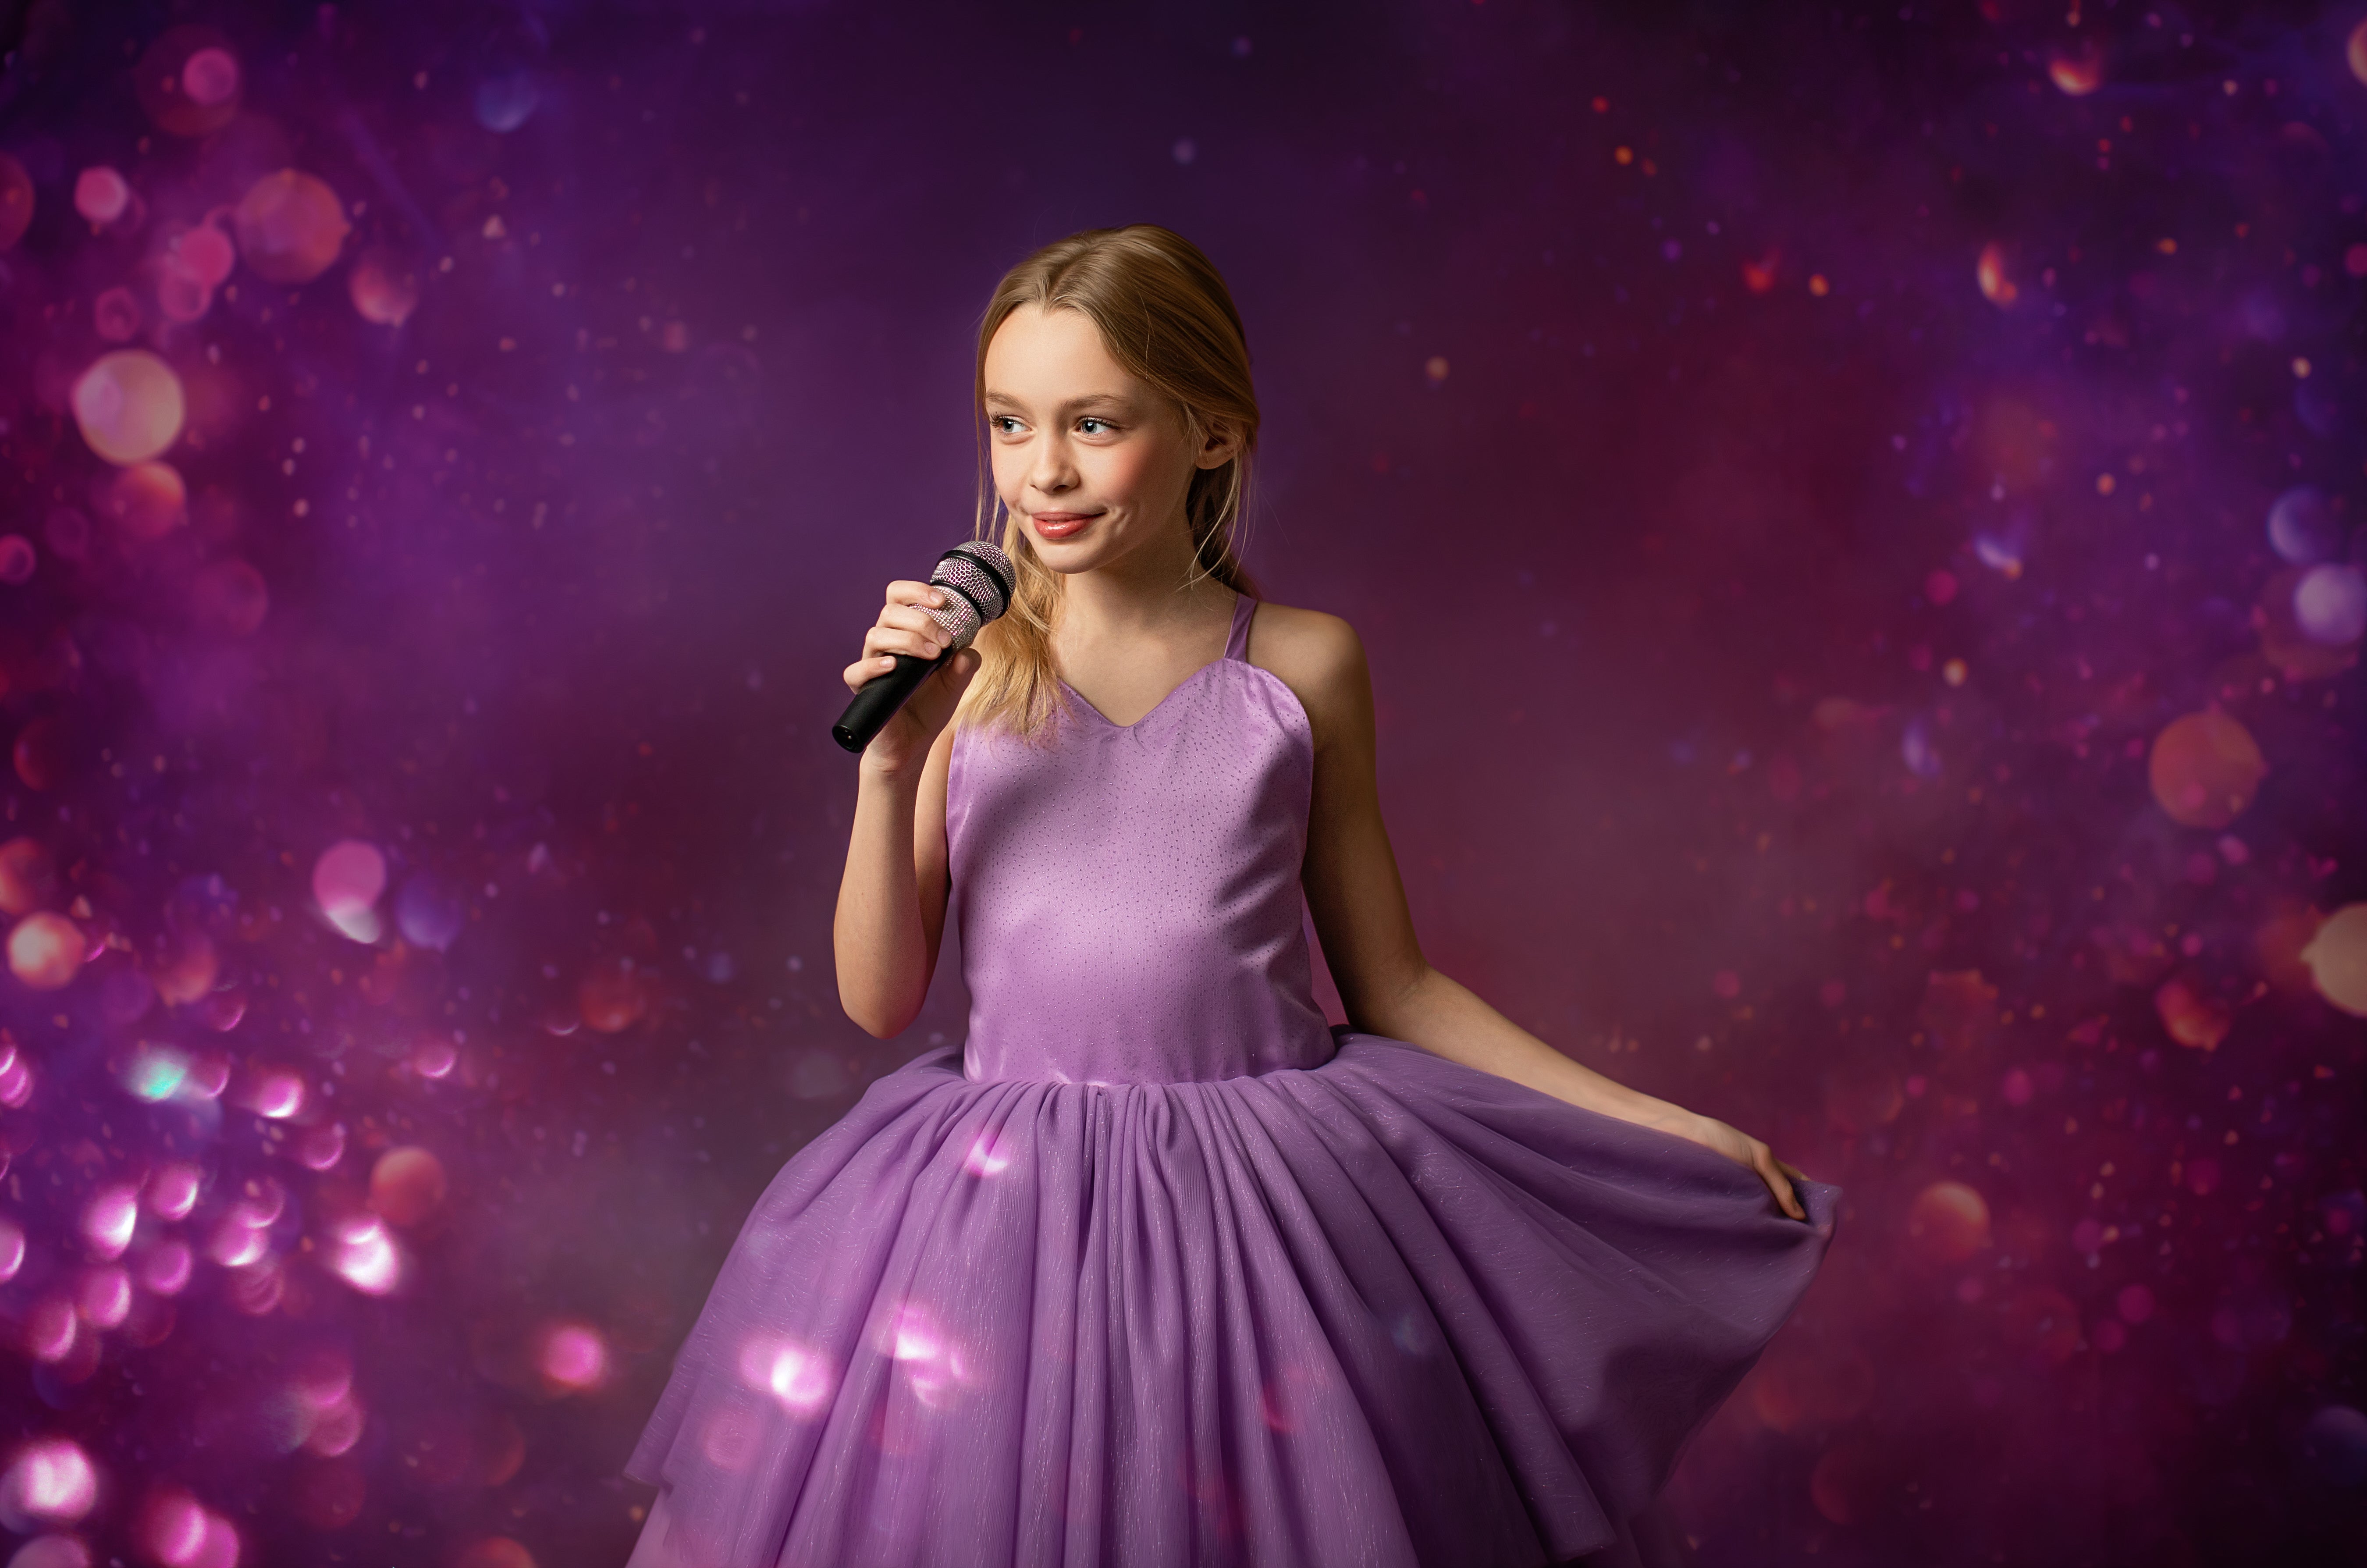 Singing girl in purple dress